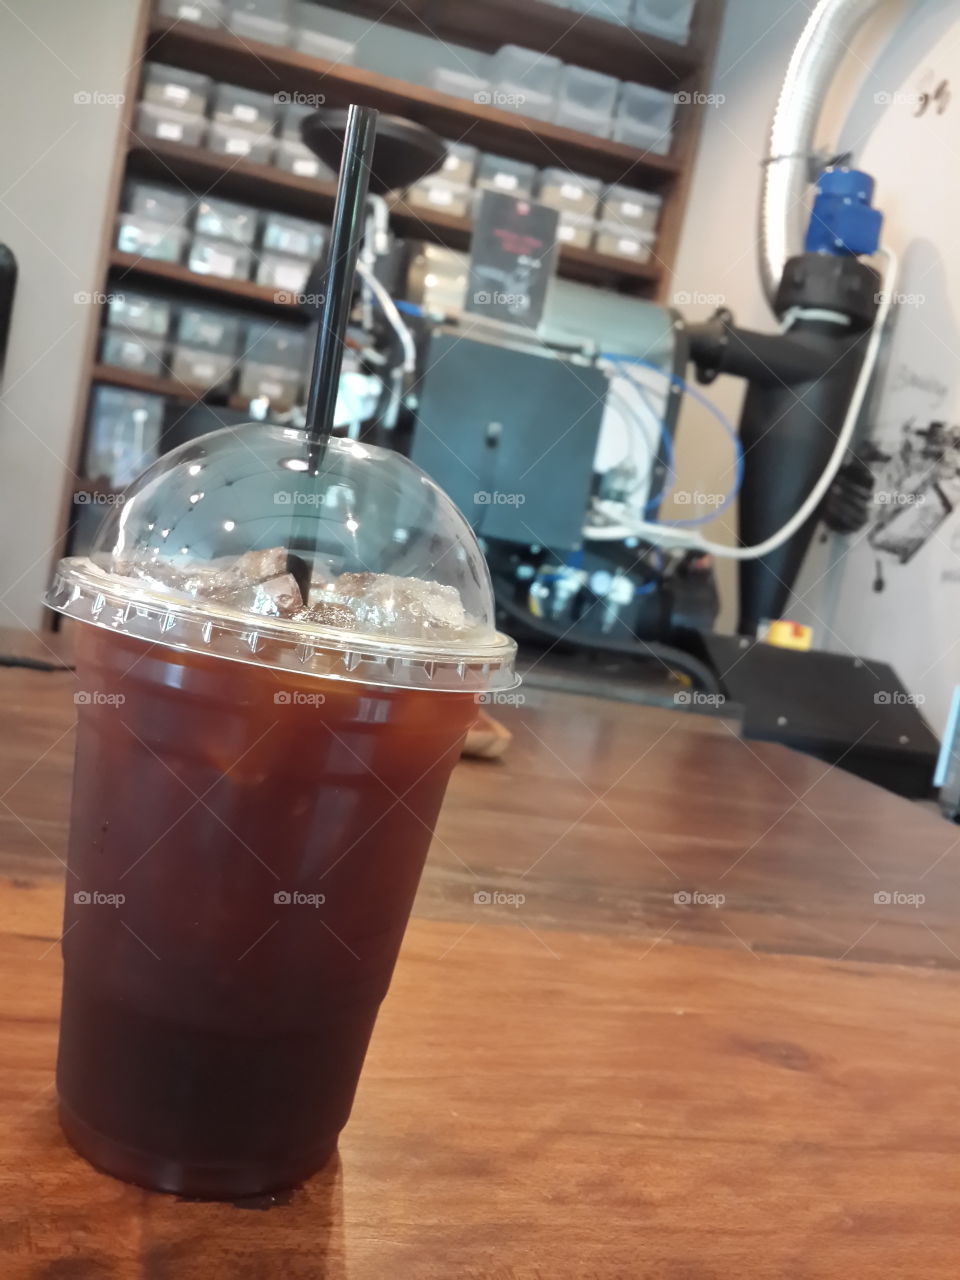 ice coffee .@ rosting machine